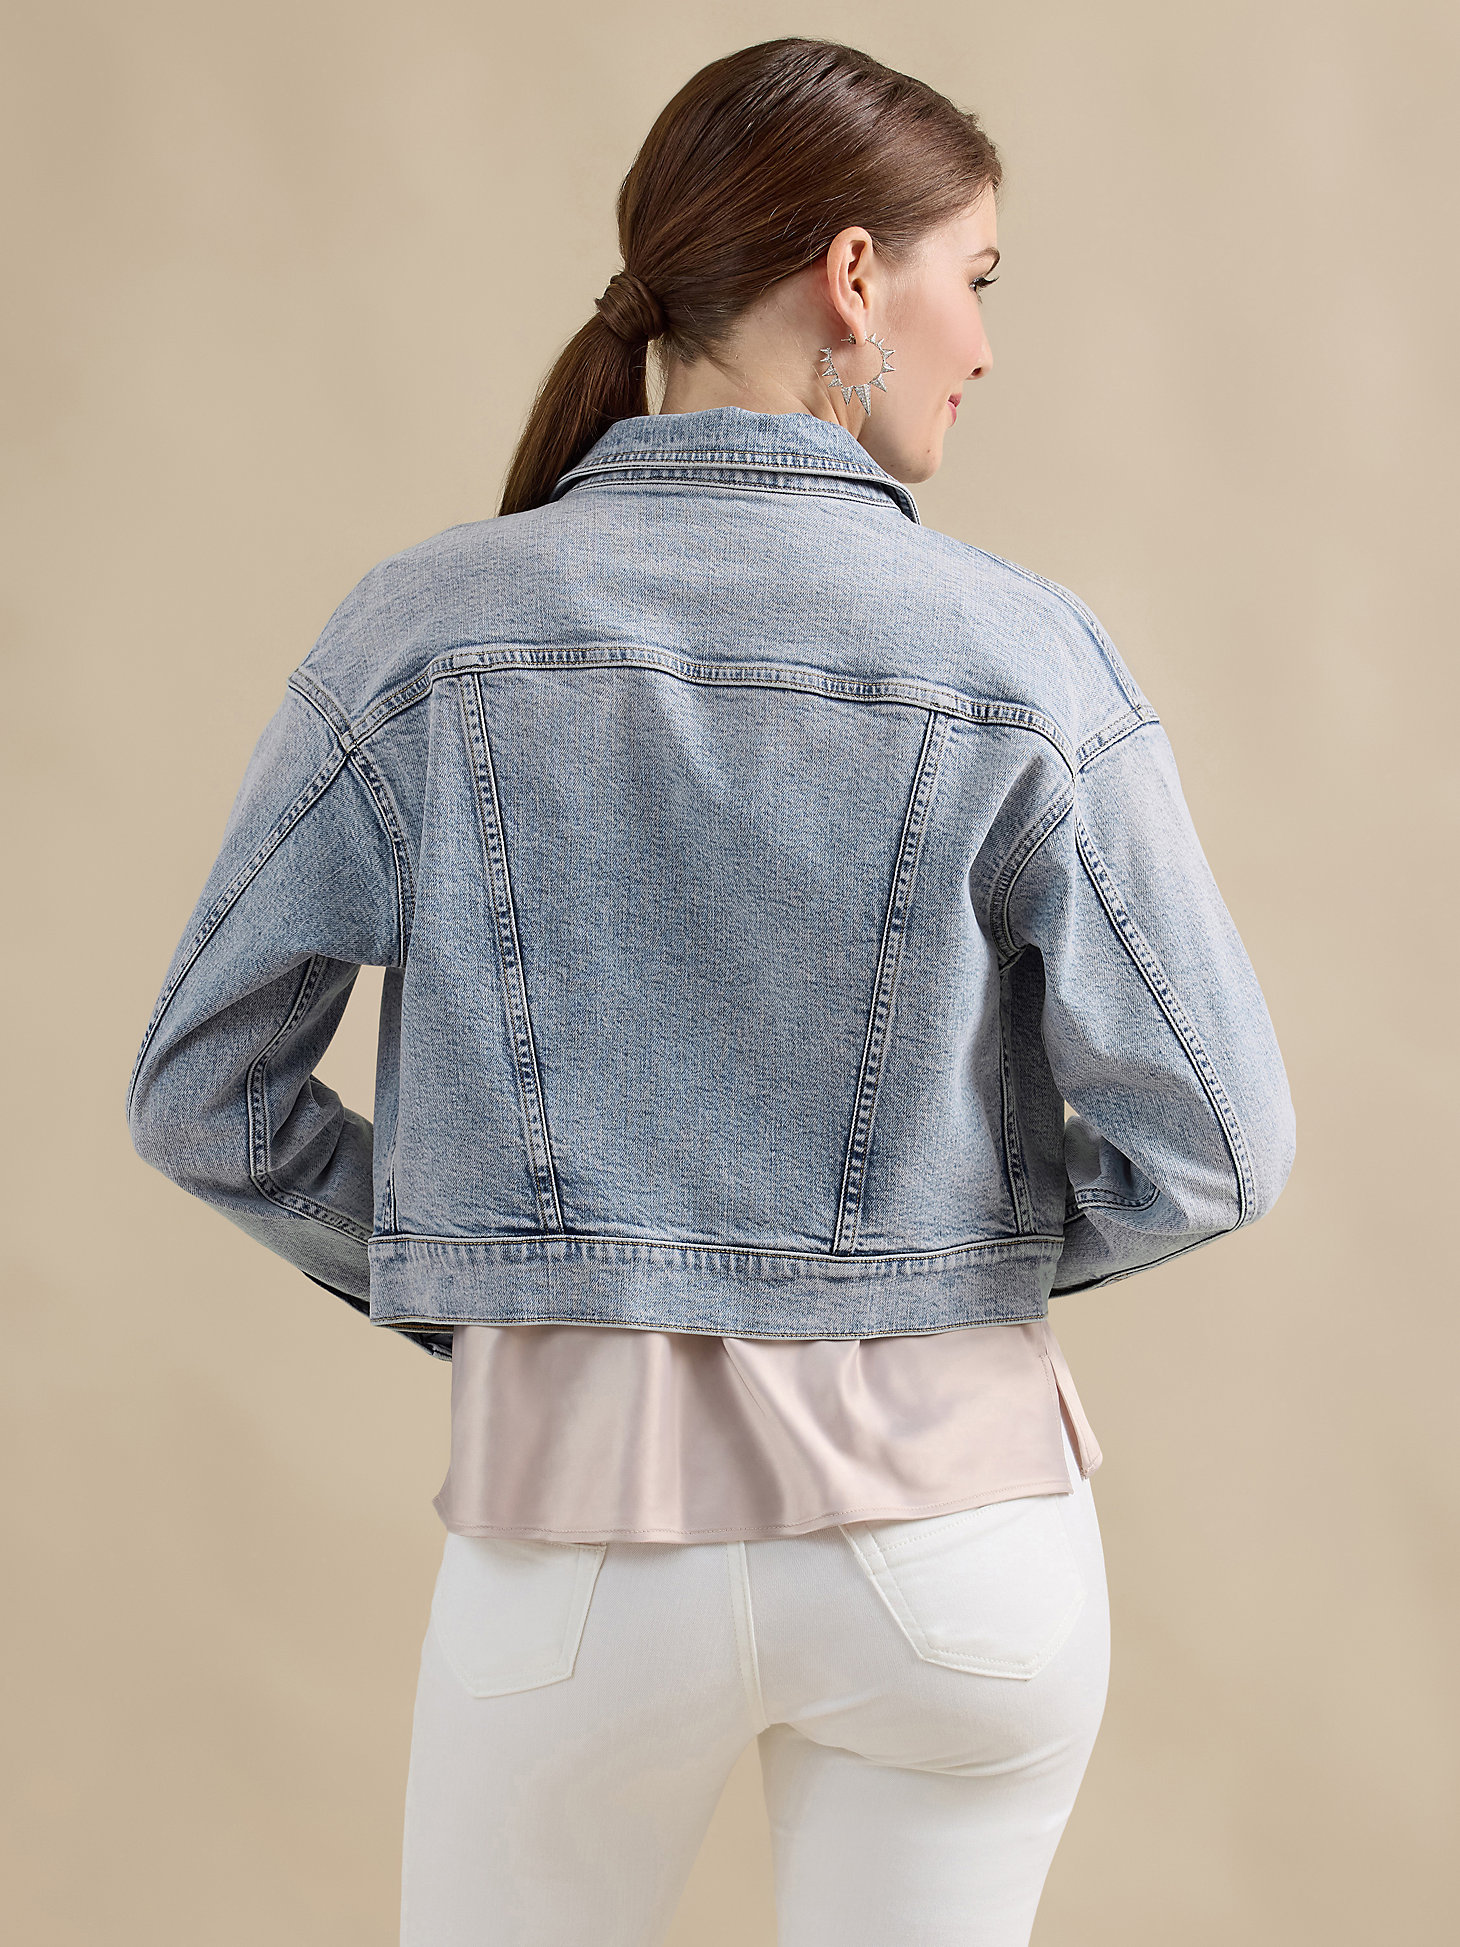 Women's Cropped Denim Jacket in Daydreaming alternative view 1